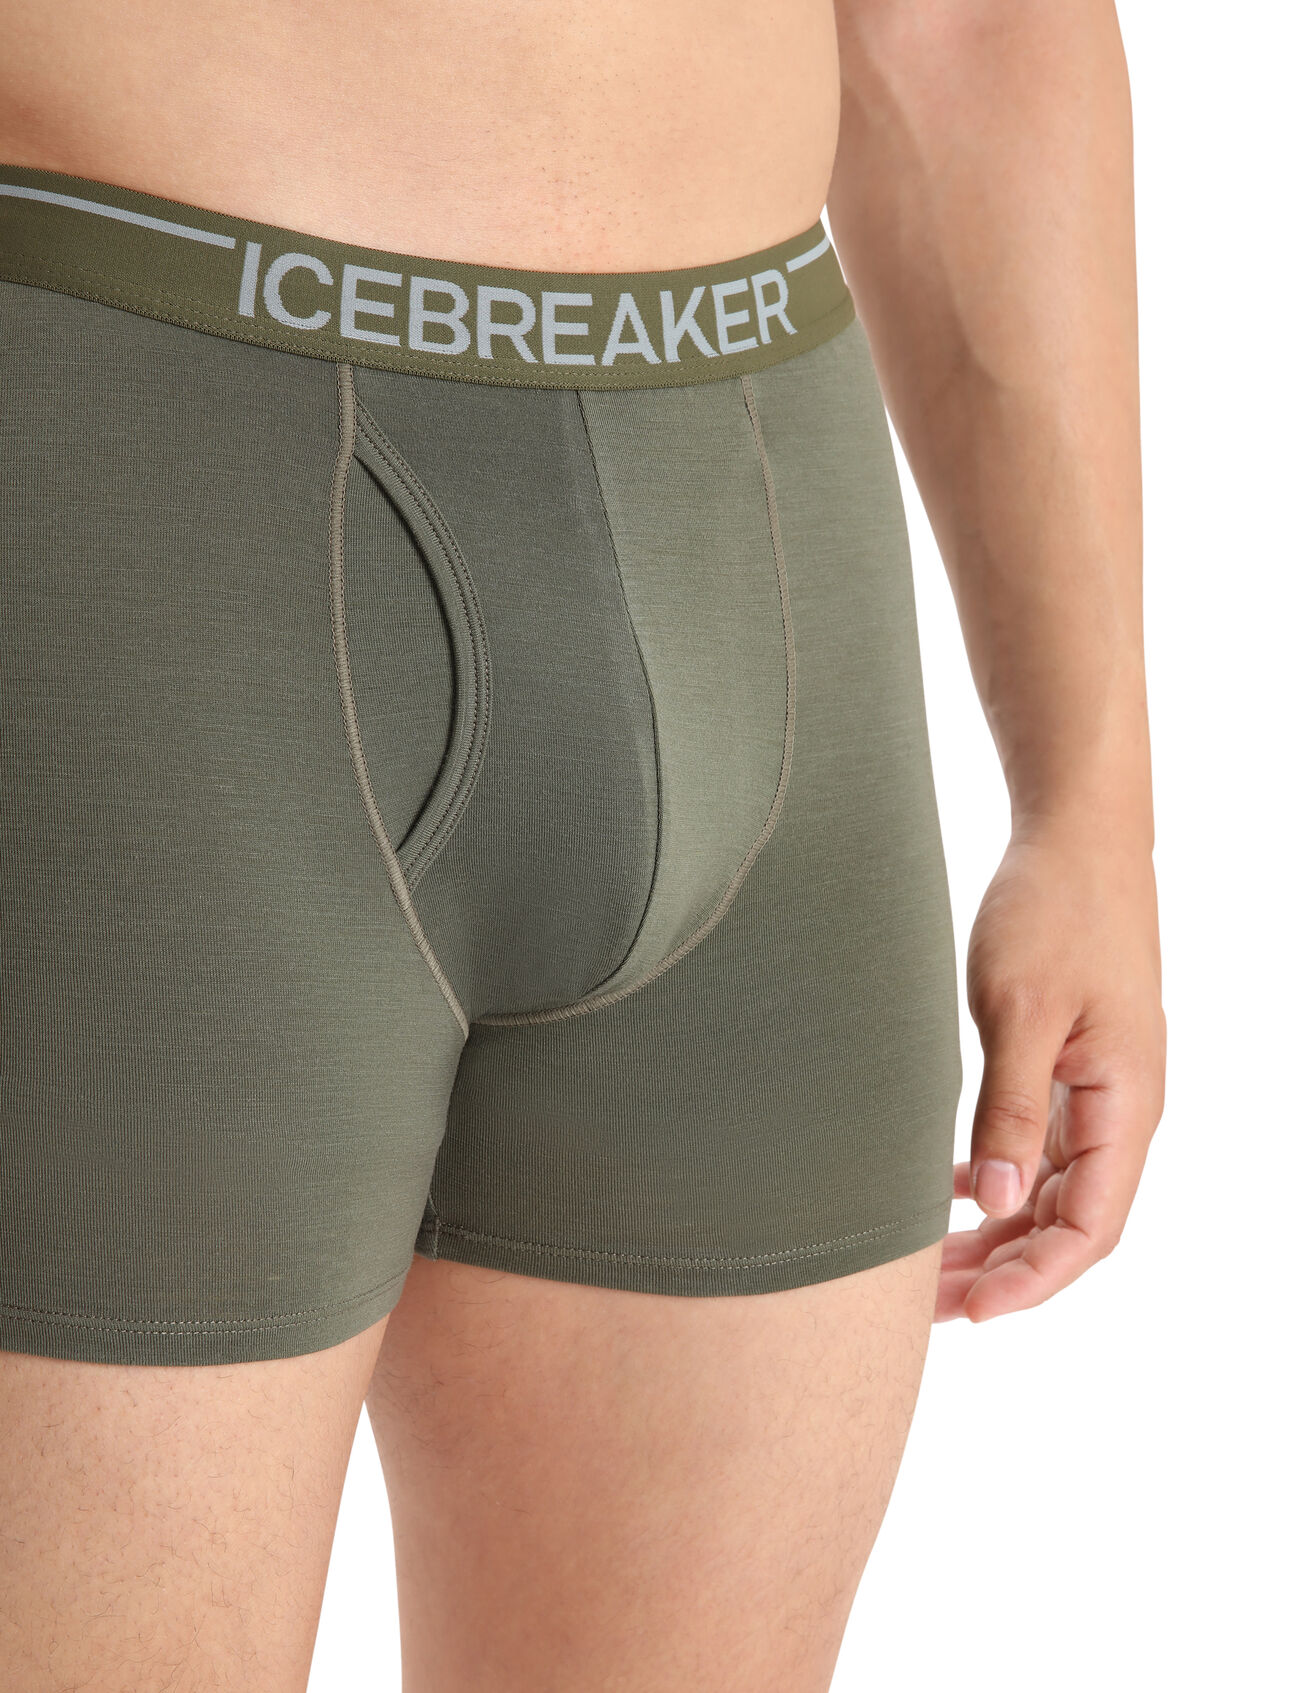 Icebreaker Men's Merino Anatomica Boxers